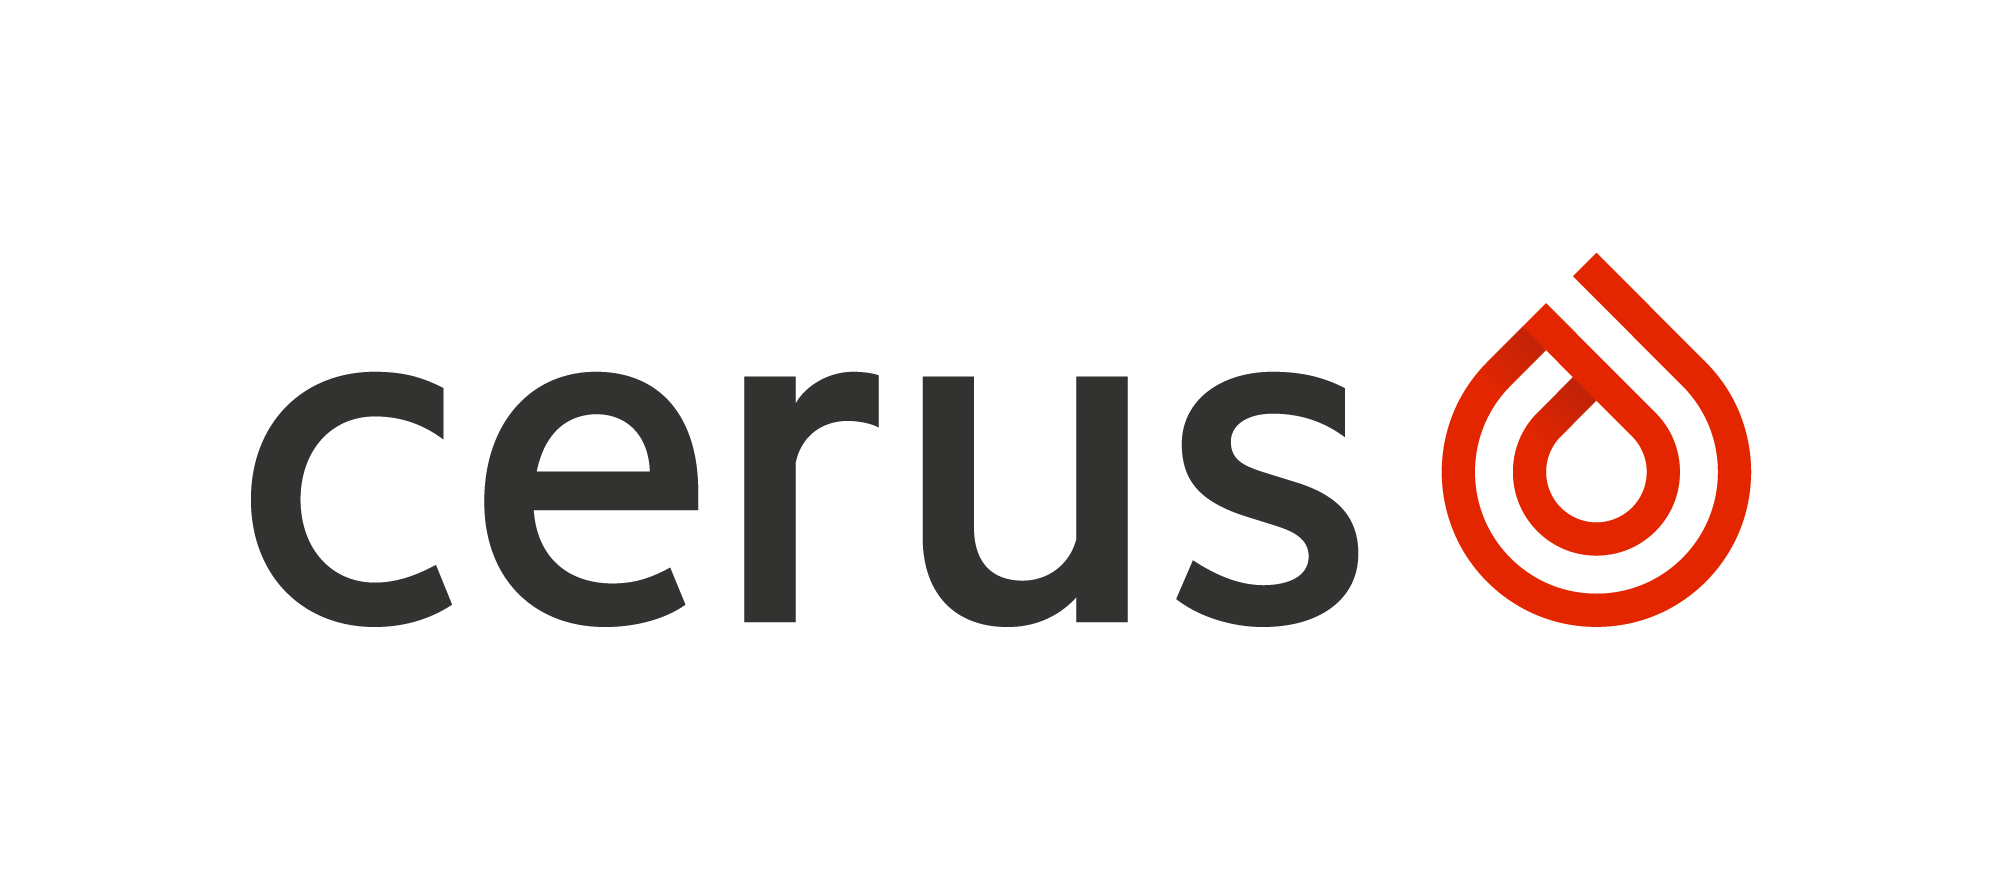 Sponsorenlogo Cerus